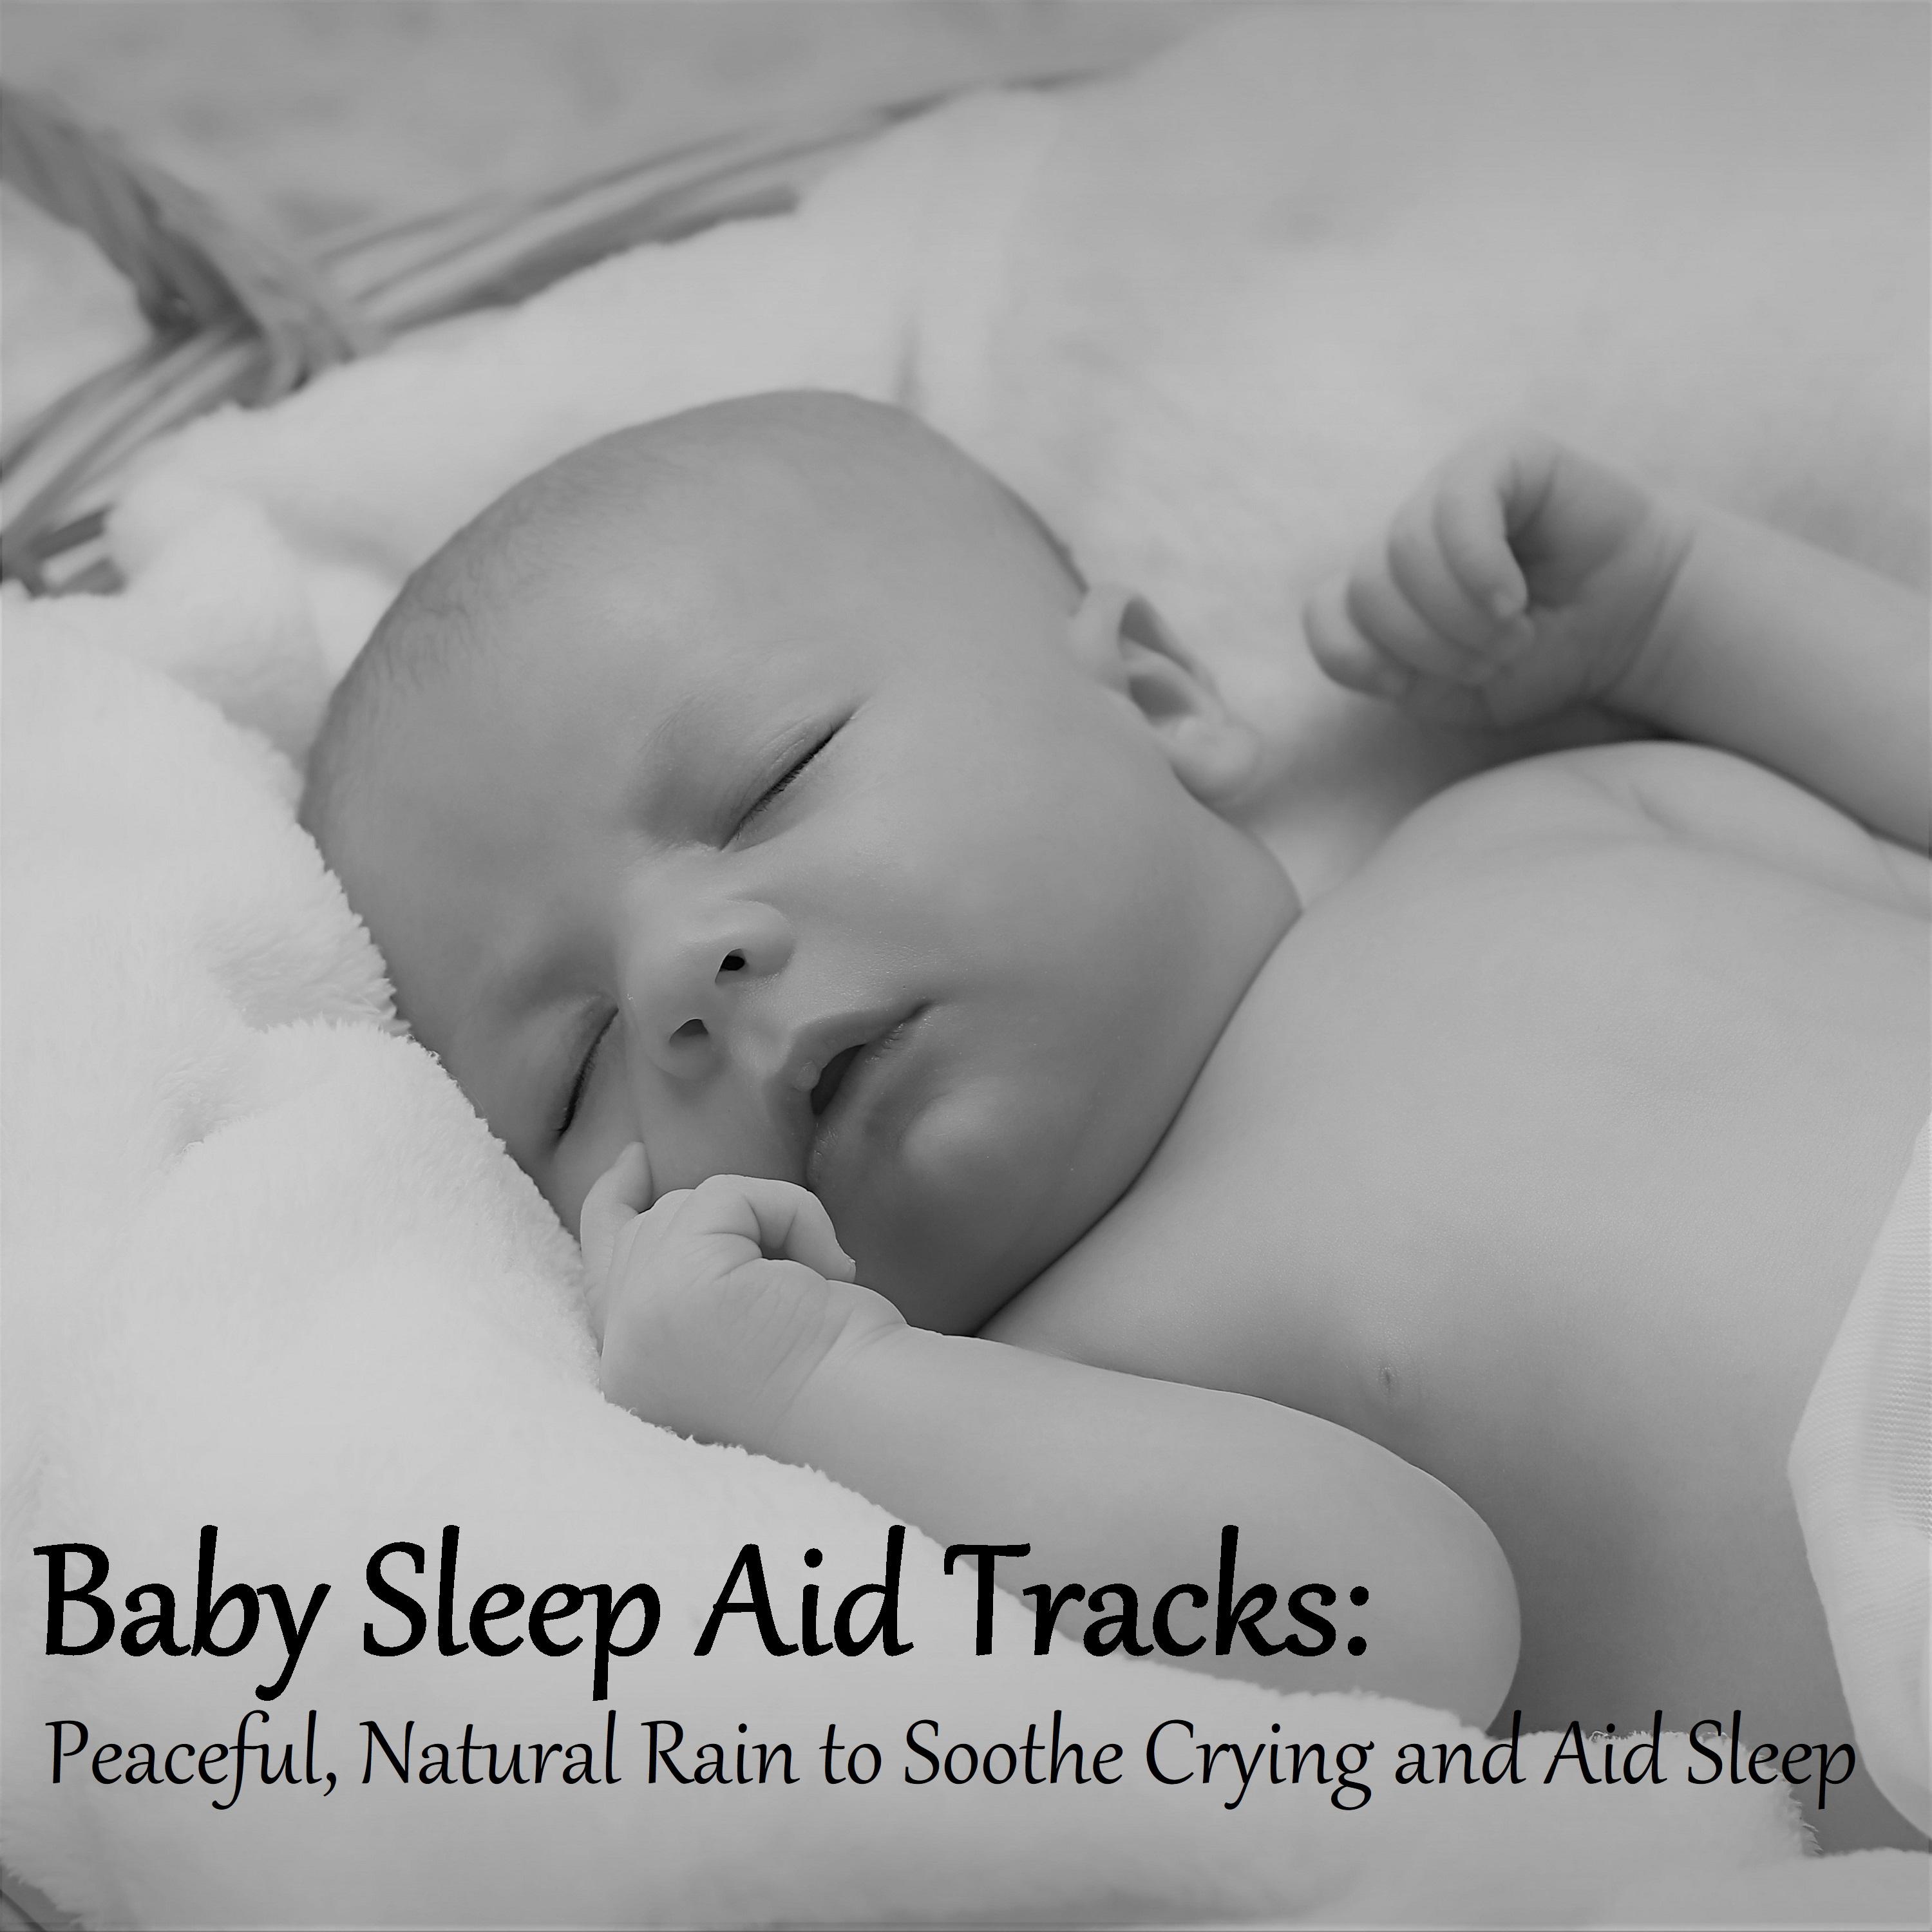 19 Baby Sleep Aid Tracks. Peaceful, Natural Rain to Soothe Crying and Aid Sleep